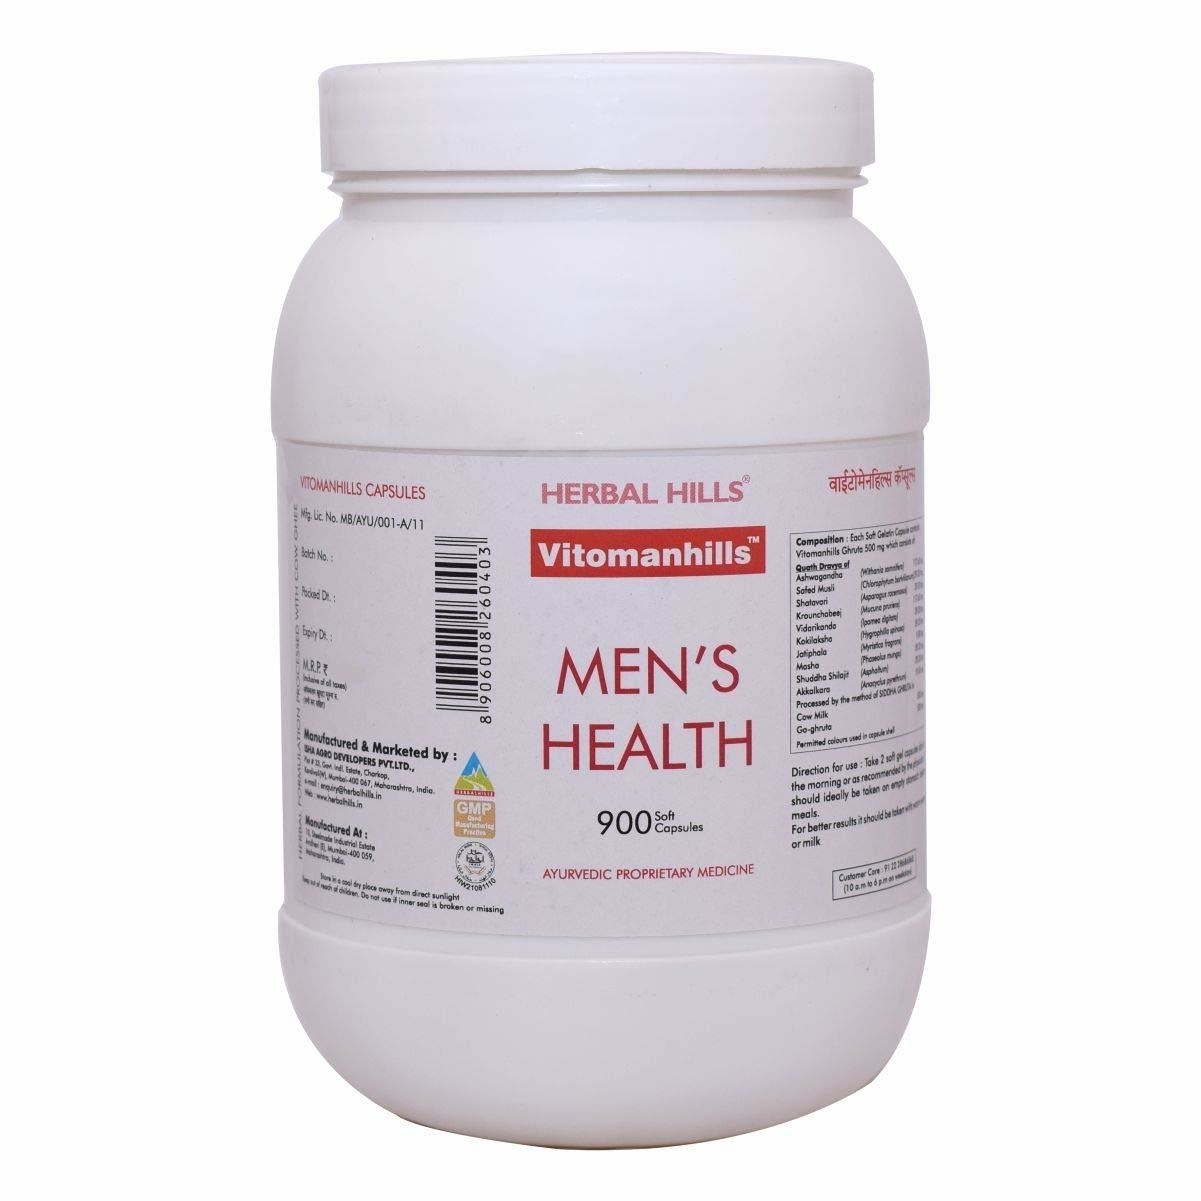 Herbal Hills Vitomanhills Men's Health 900 Capsules